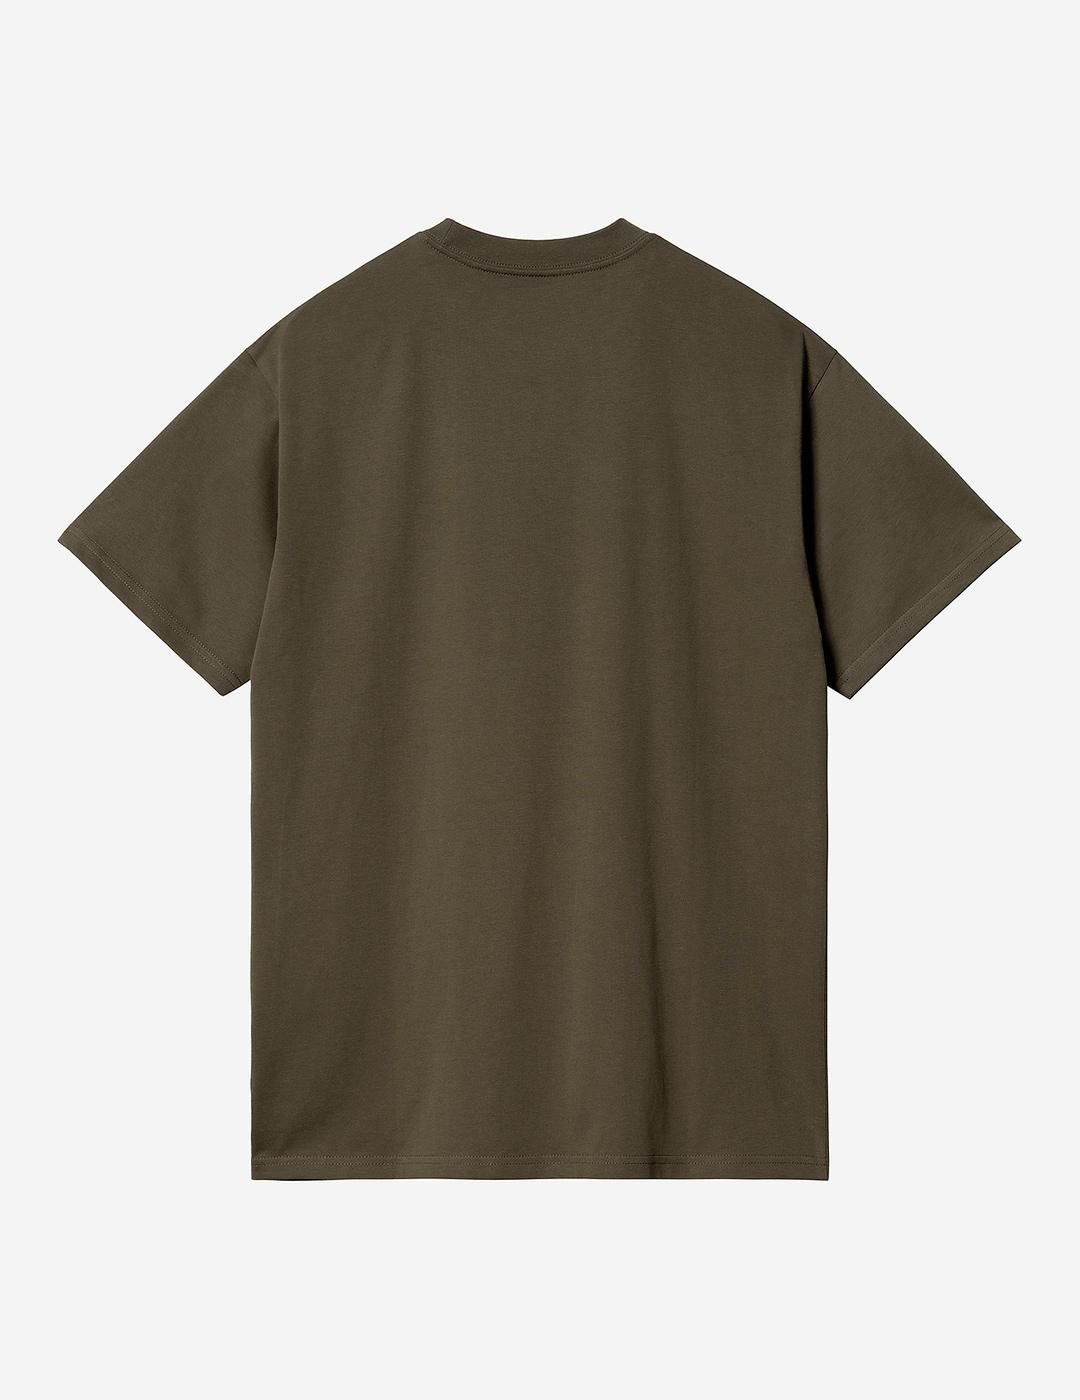 Camiseta CARHARTT SCRIPT EMBROIDERY - Cypress/Black